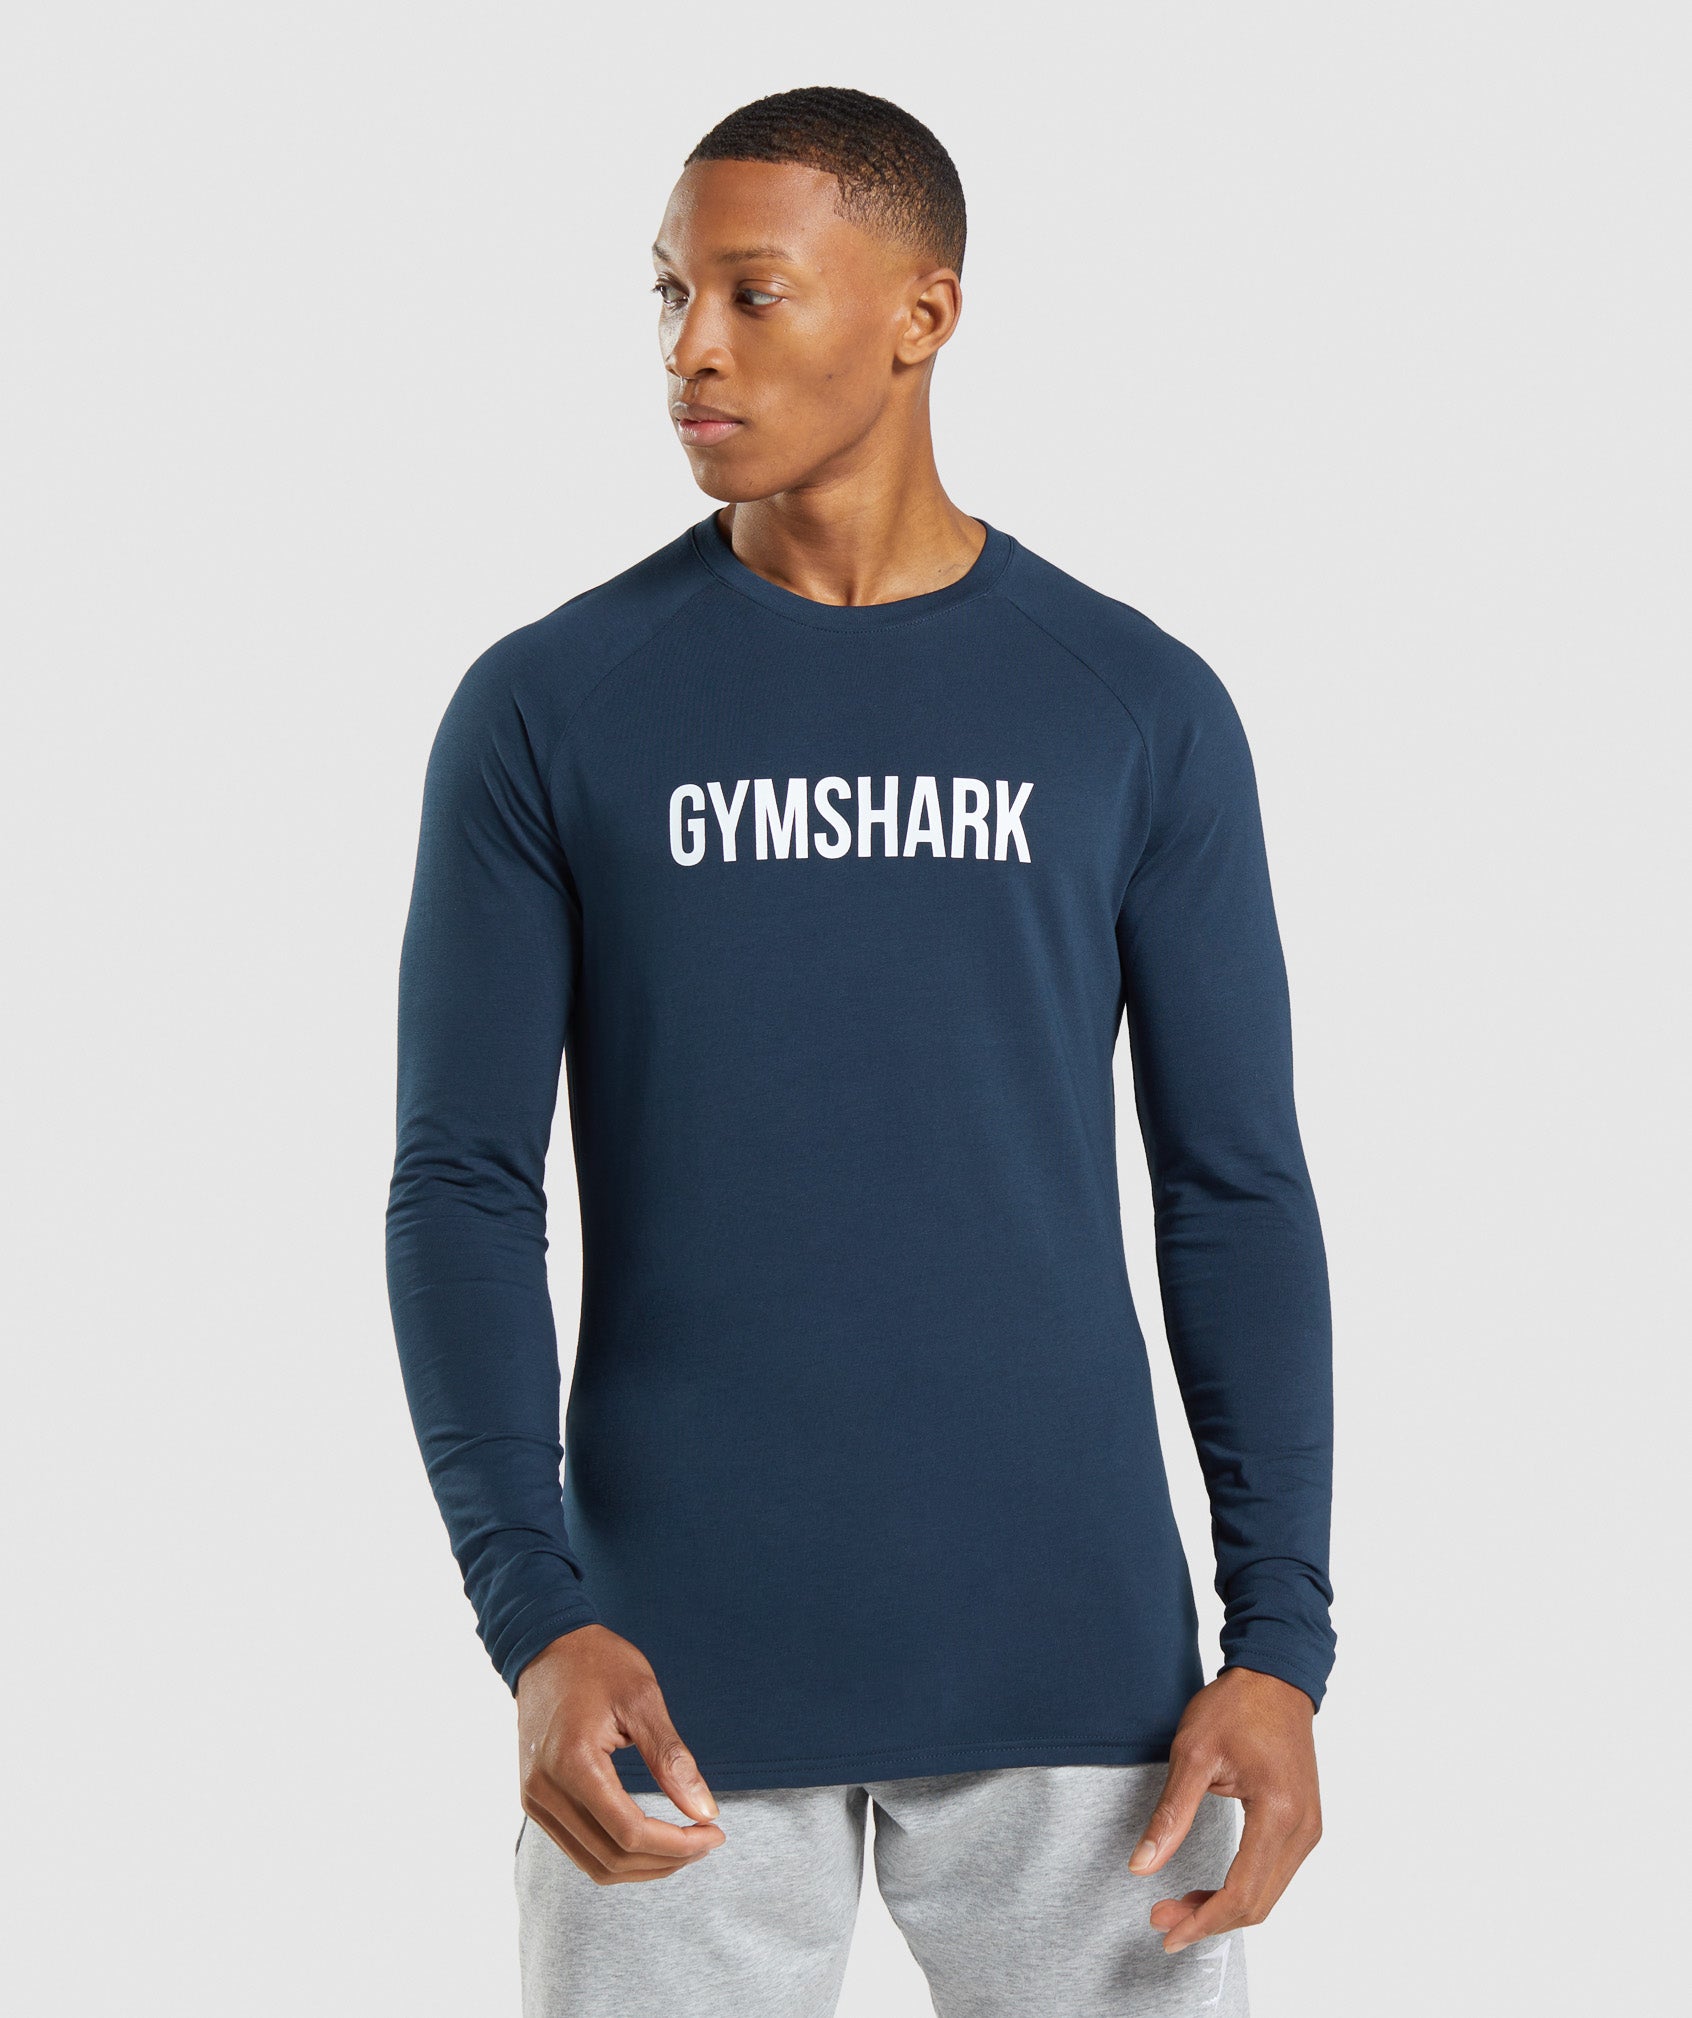 Gymshark Apollo Long Sleeve T-Shirt - Navy